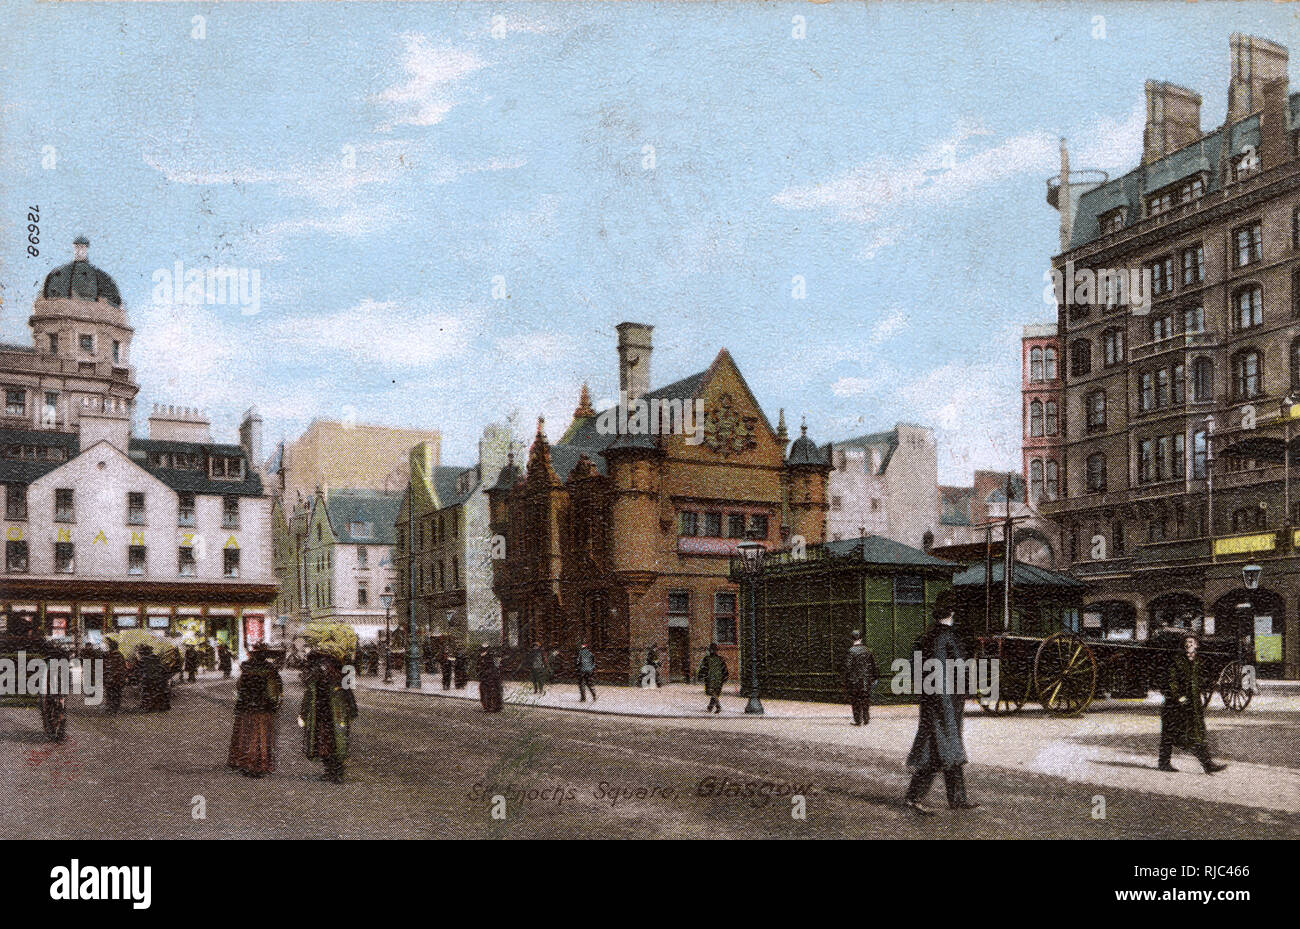 Glasgow, Scotland - St. Enoch's Square. Stock Photo